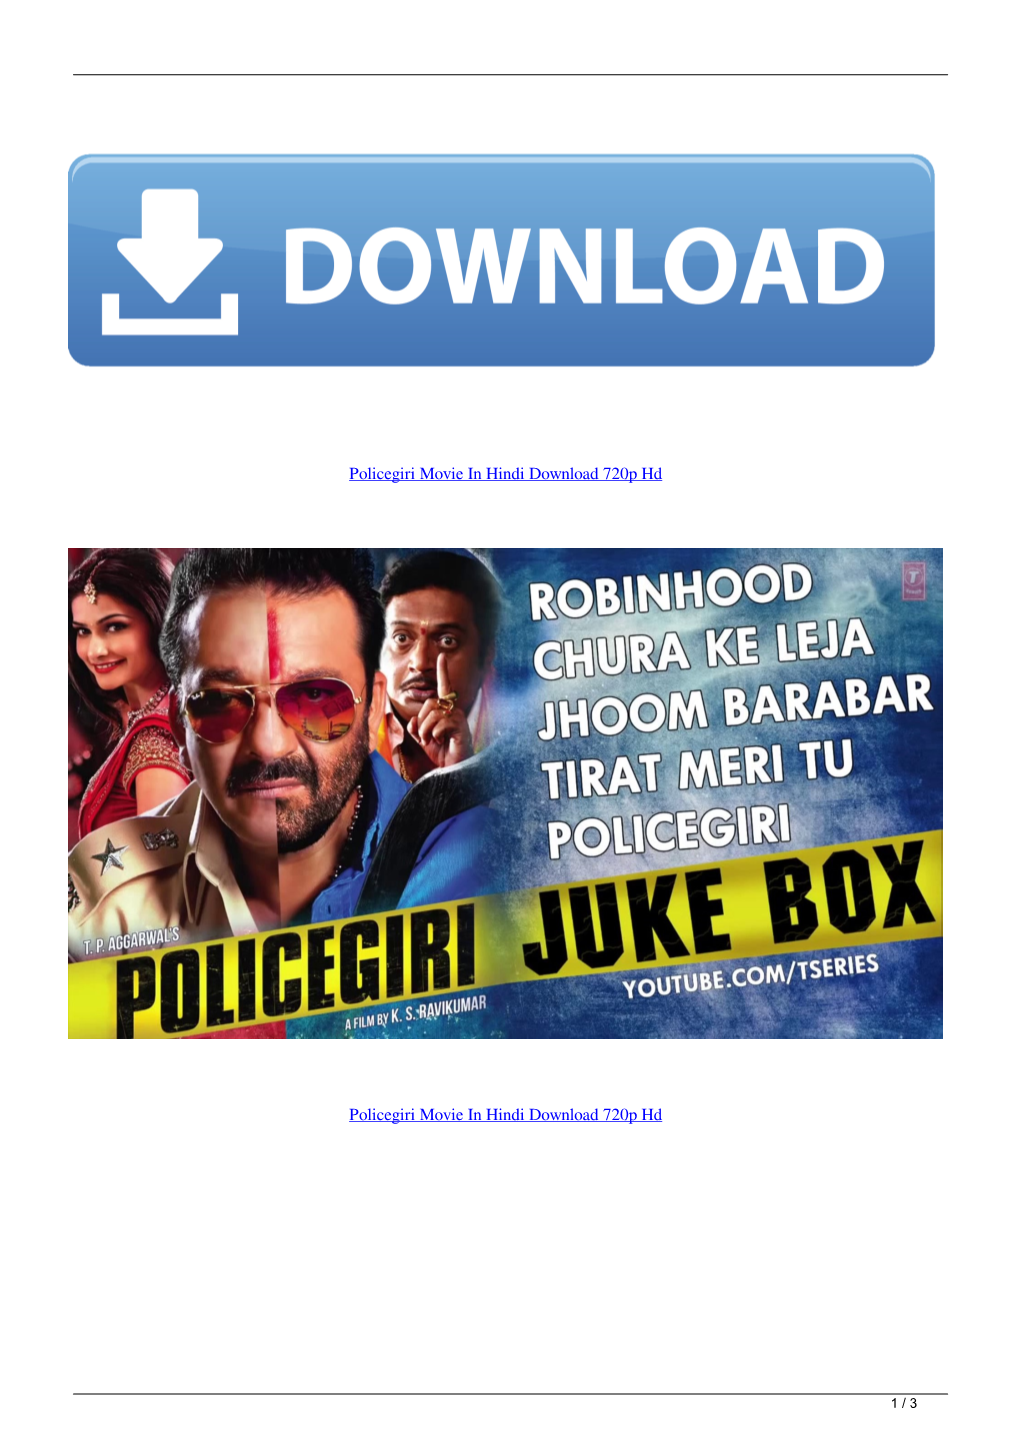 Policegiri Movie in Hindi Download 720P Hd